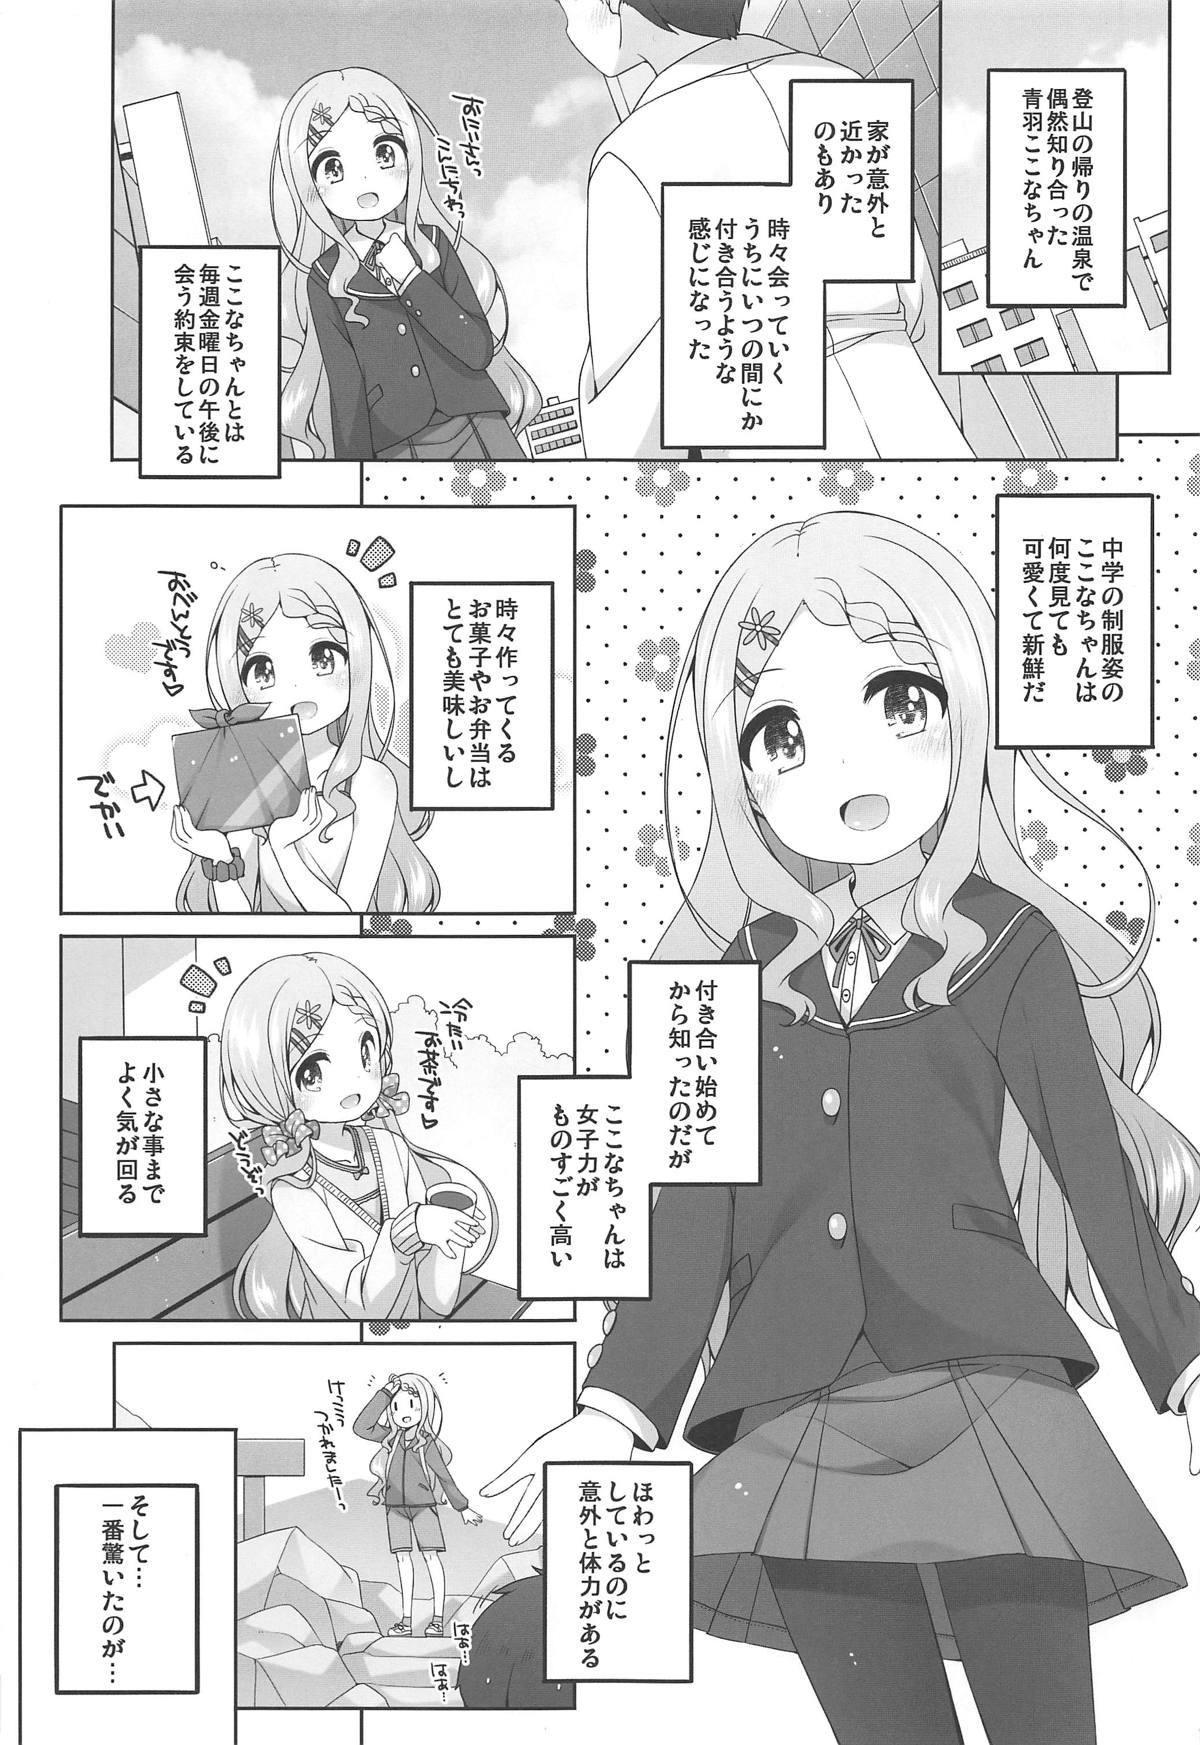 Show Kokona-chan Kawaii. - Yama no susume Squirting - Page 4